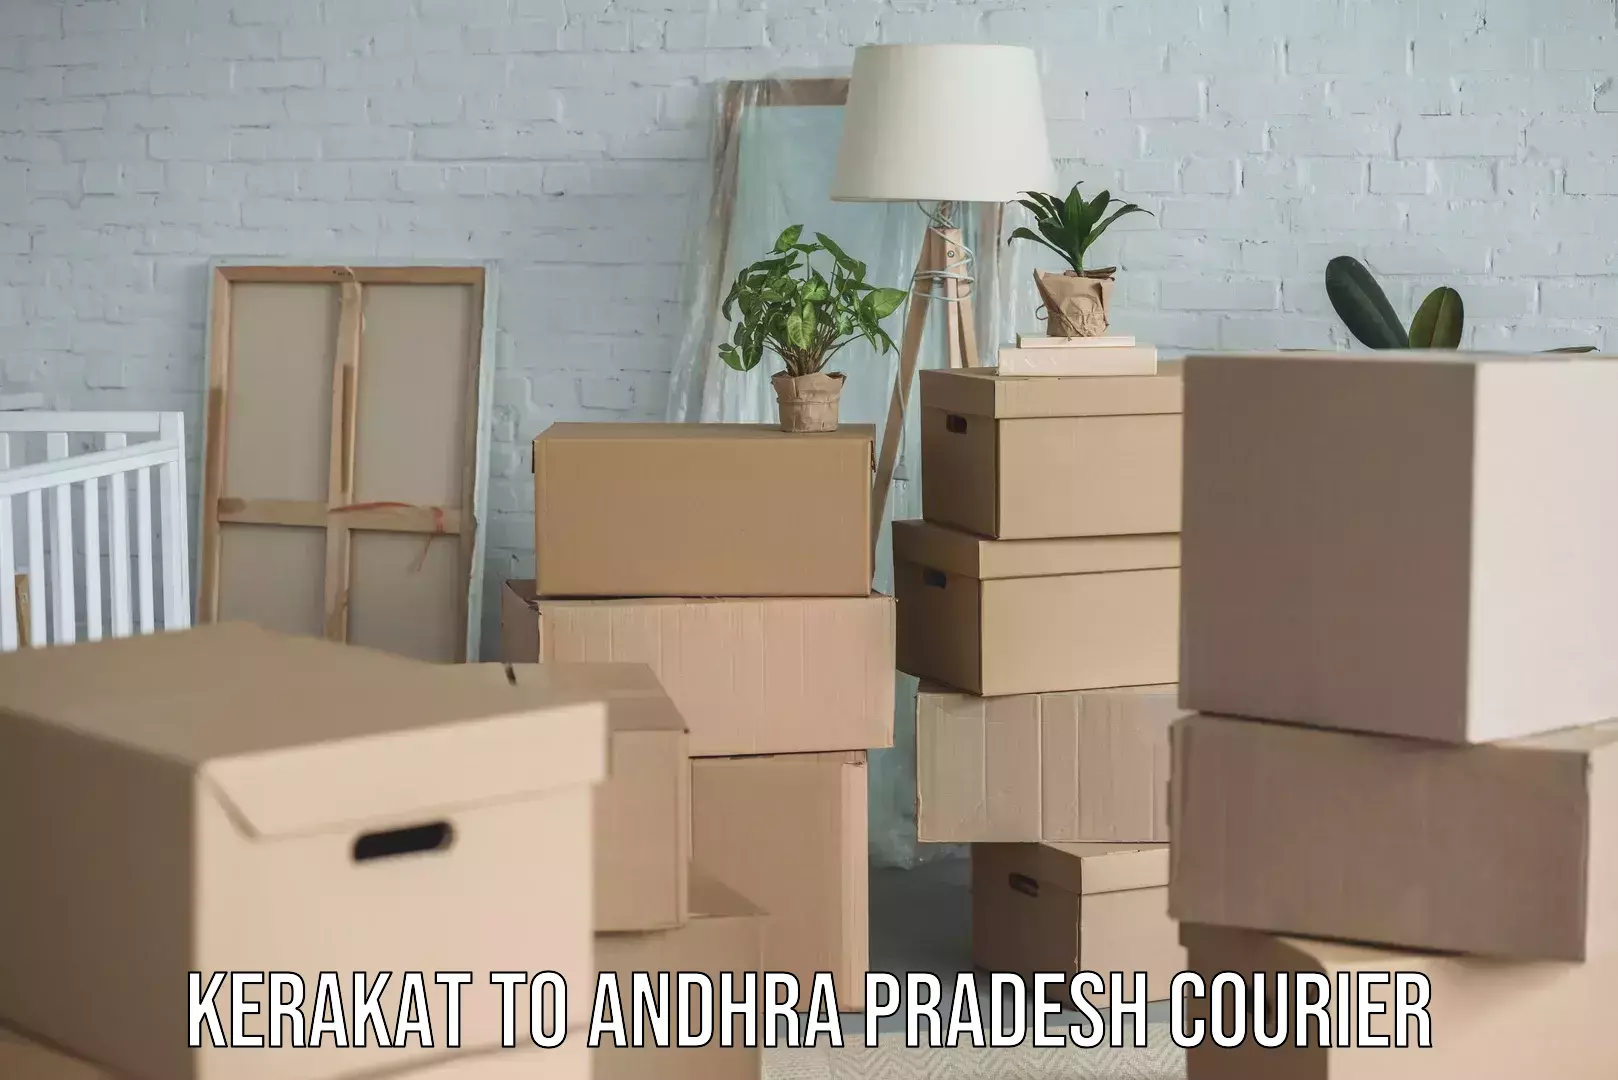 Moving and storage services Kerakat to Andhra Pradesh